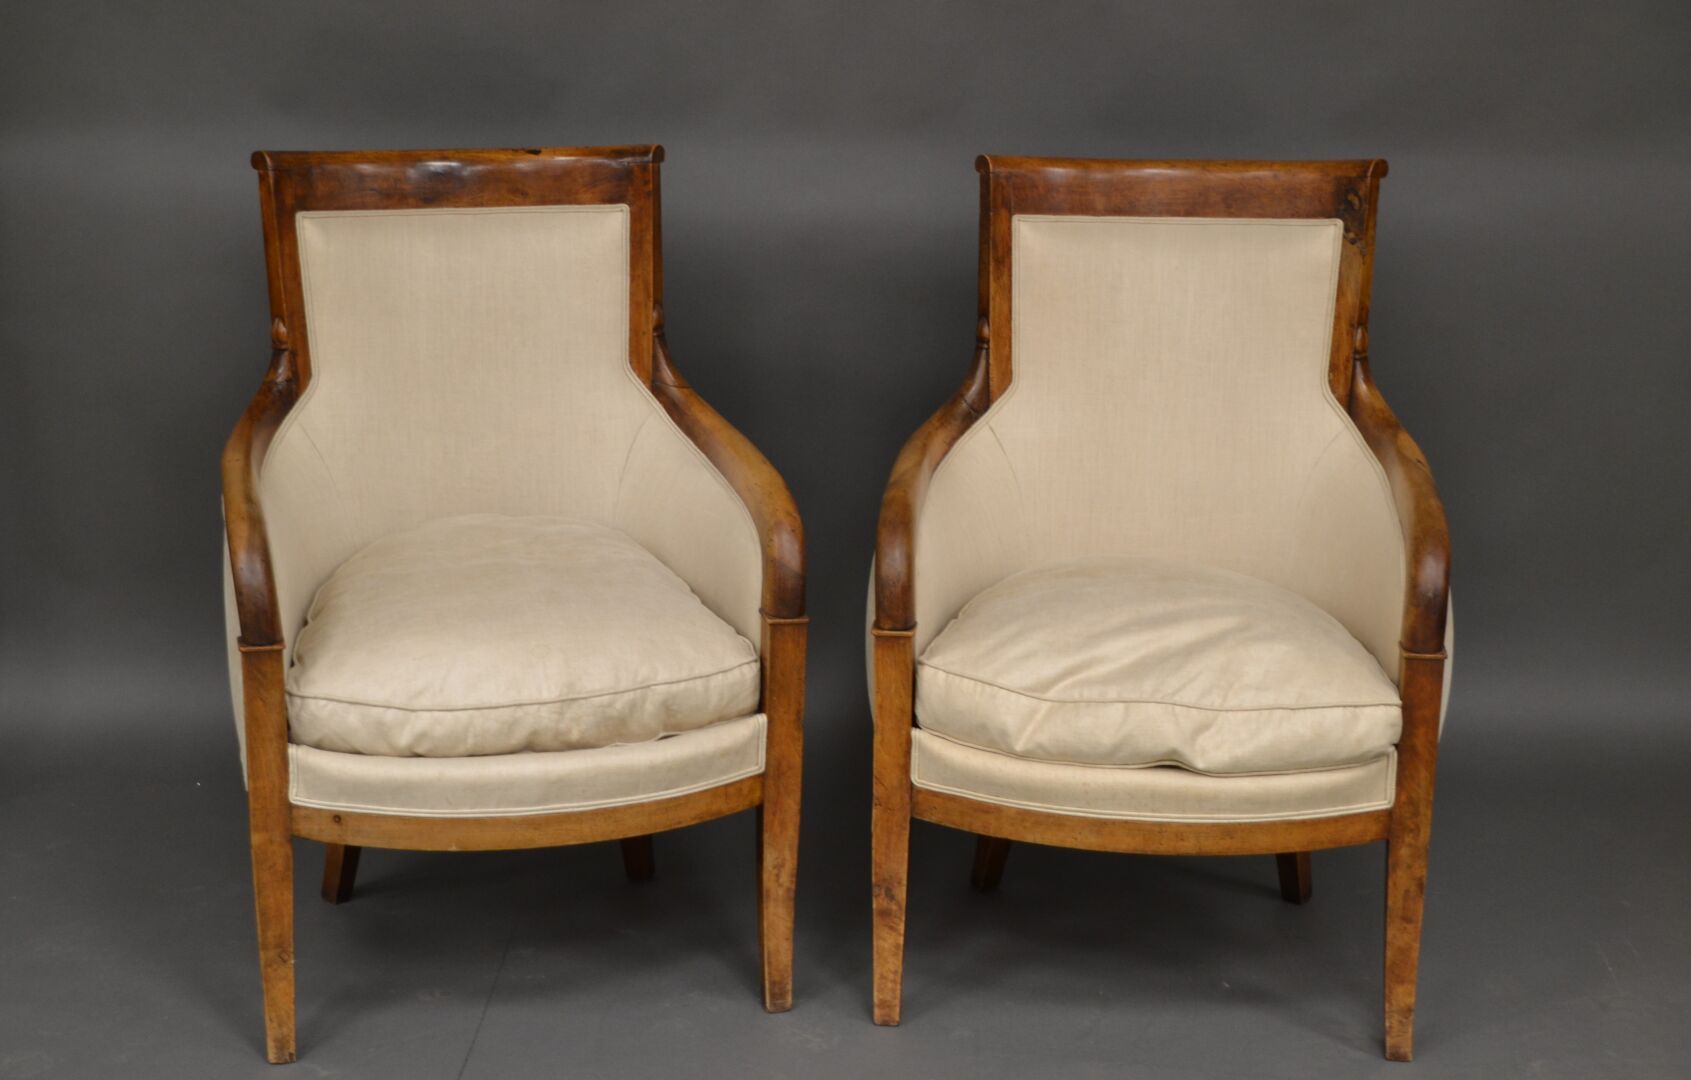 Null 一对胡桃木扶手椅，剑腿。领事馆时期。 
H.高 97 厘米，宽 74 厘米，长 67 厘米